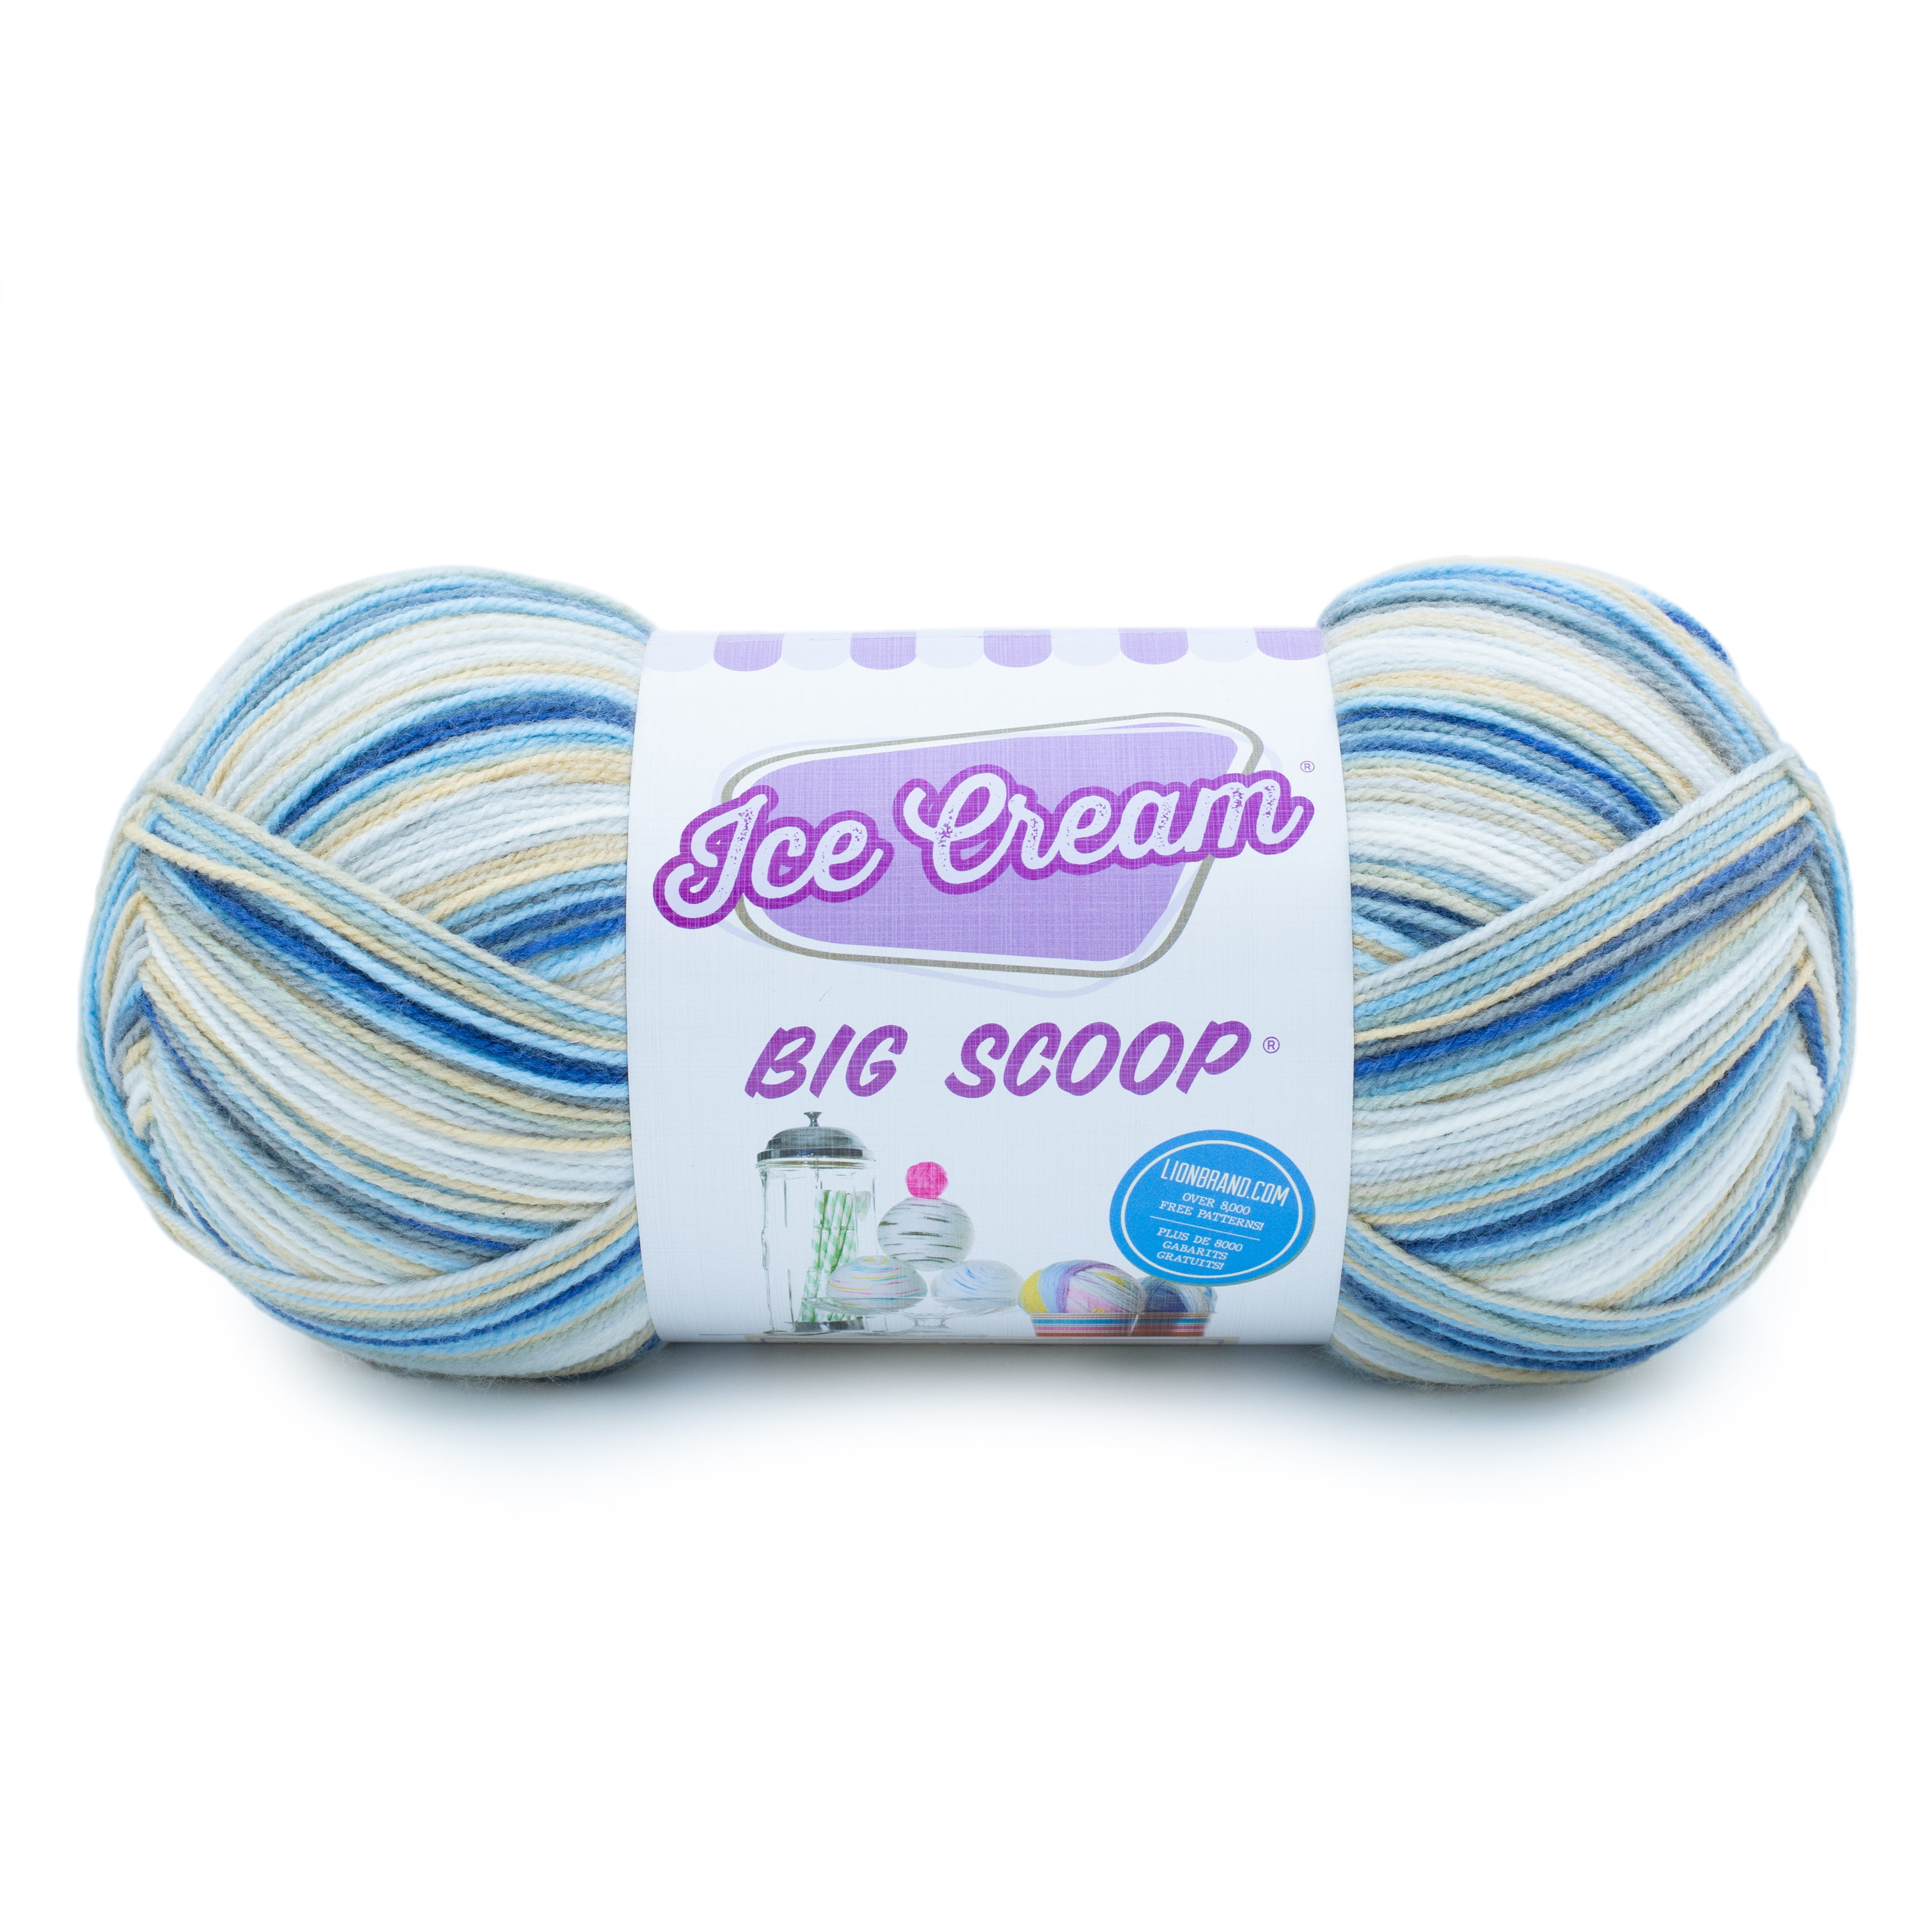 Lion Brand Yarn Ice Cream Big Scoop Cookies & Cream Light Acrylic  Multi-color Yarn 1 Pack 